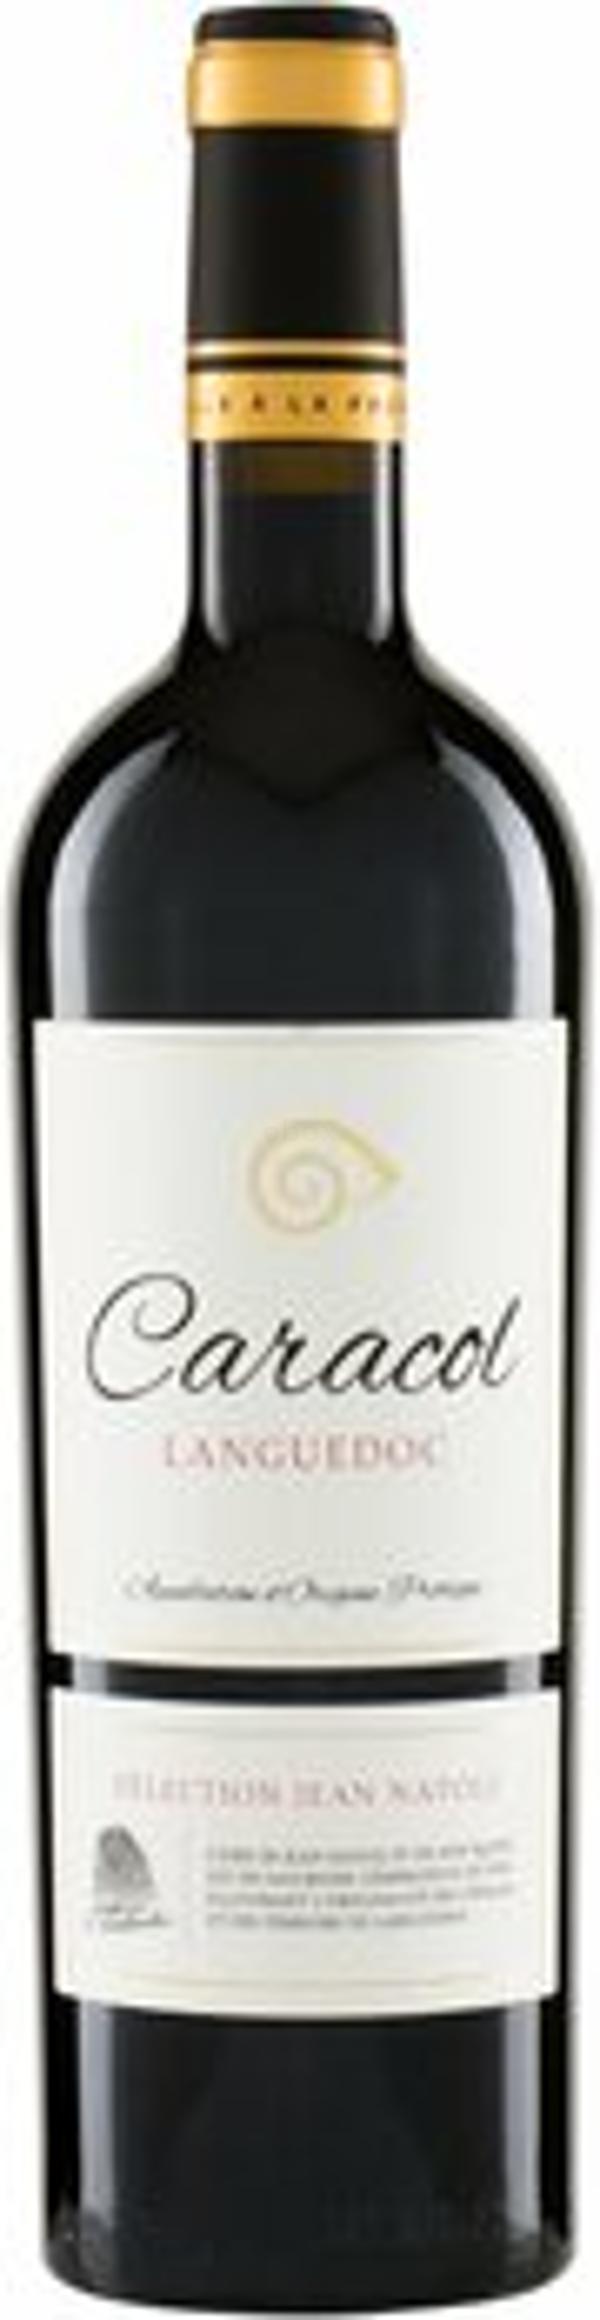 Produktfoto zu CARACOL Languedoc Rouge AOP, Rotwein trocken, 0,75l